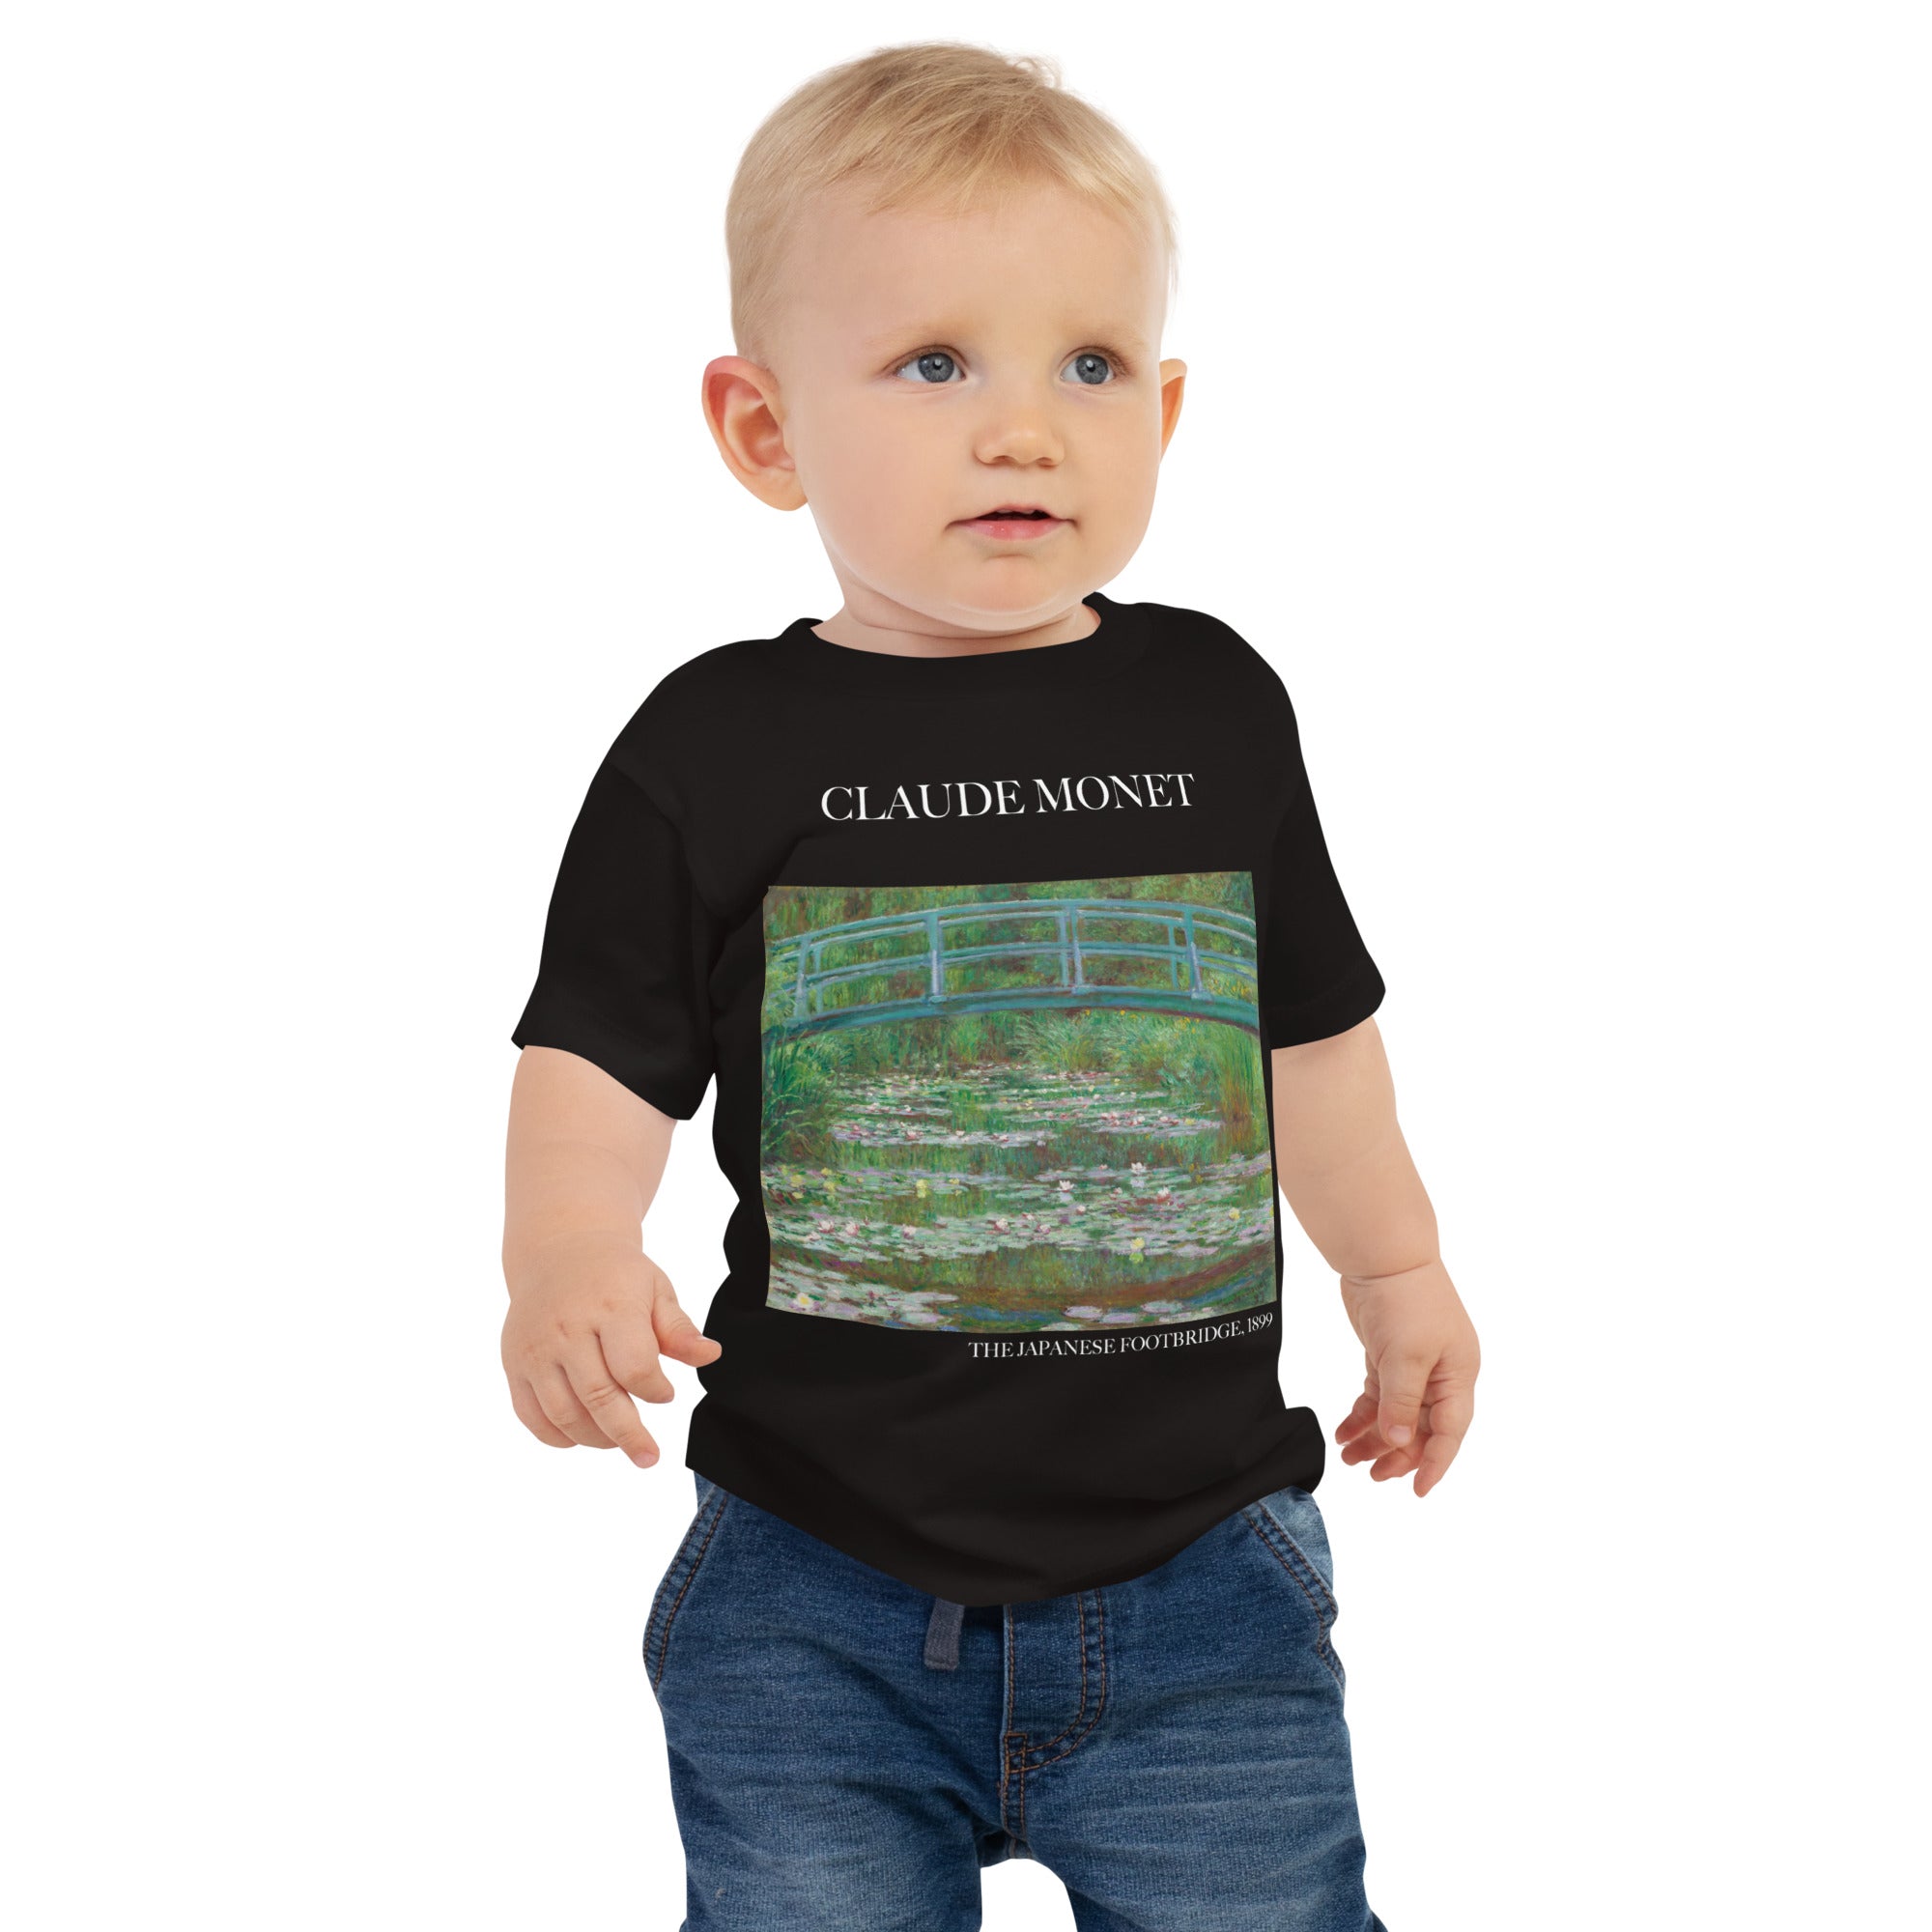 Claude Monet 'The Japanese Footbridge' Famous Painting Baby Staple T-Shirt | Premium Baby Art Tee